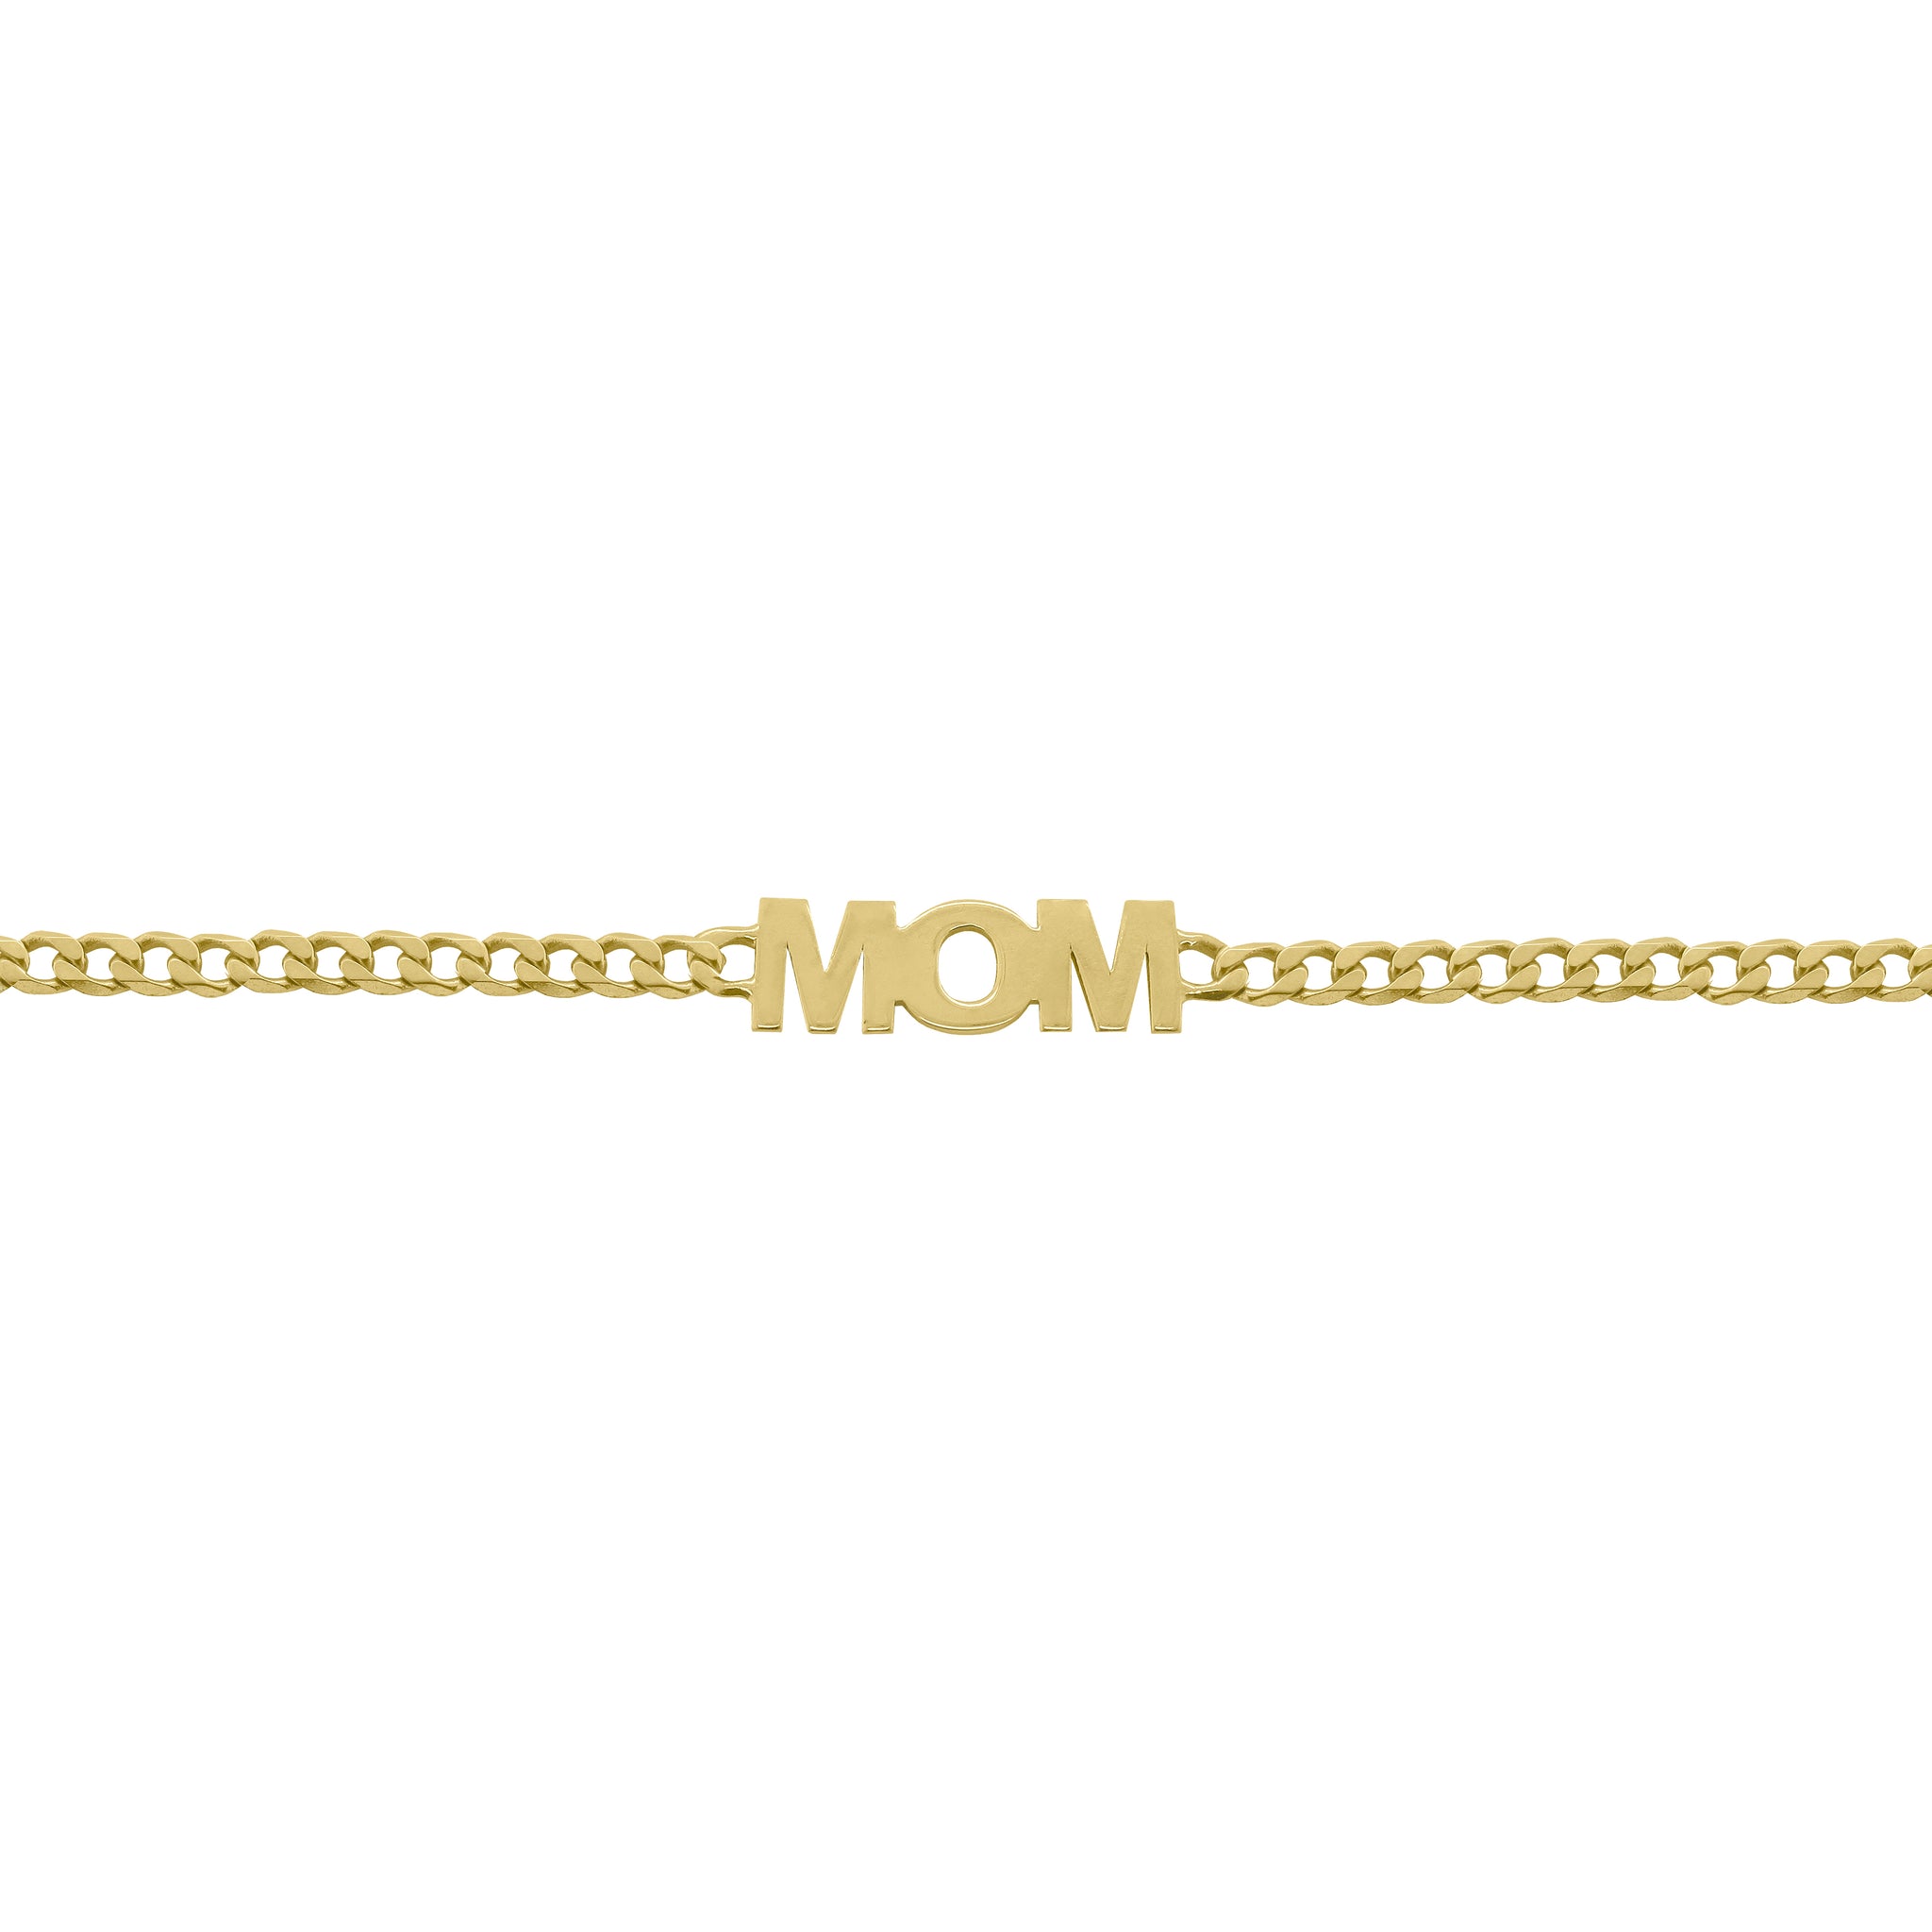 Boy Mom - Mom Life Bracelet | Beaded Bracelets - Little Words Project